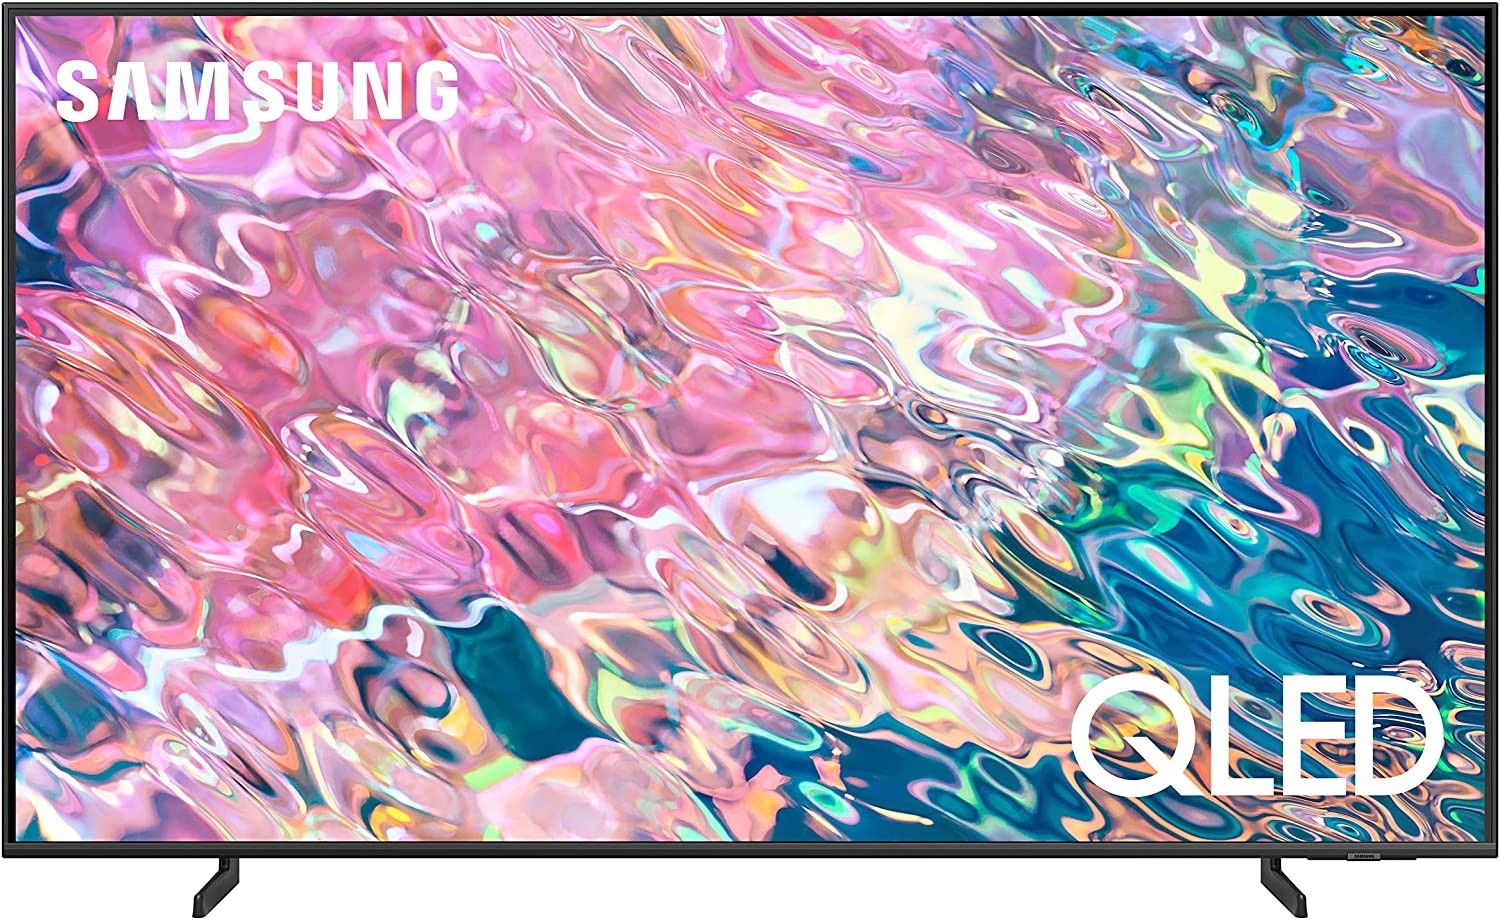 Samsung QLED class Q60B series